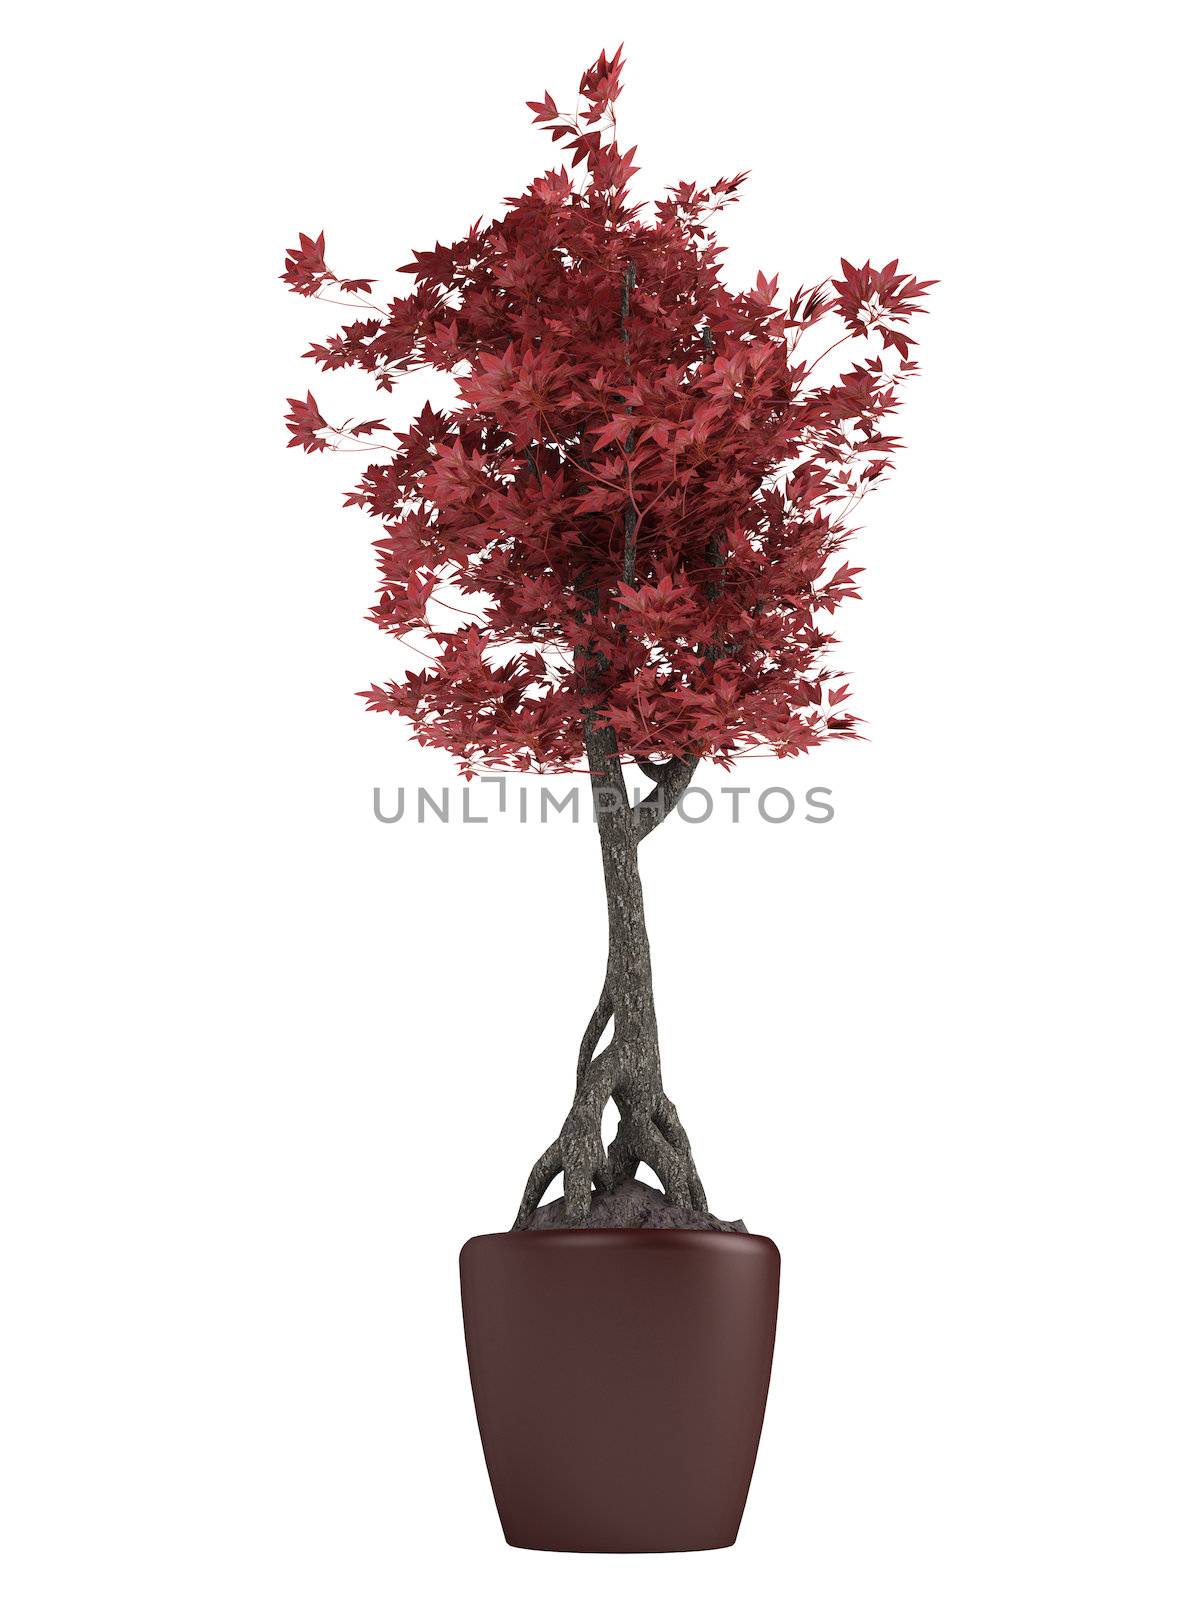 red bonsai tree in a pot by AlexanderMorozov